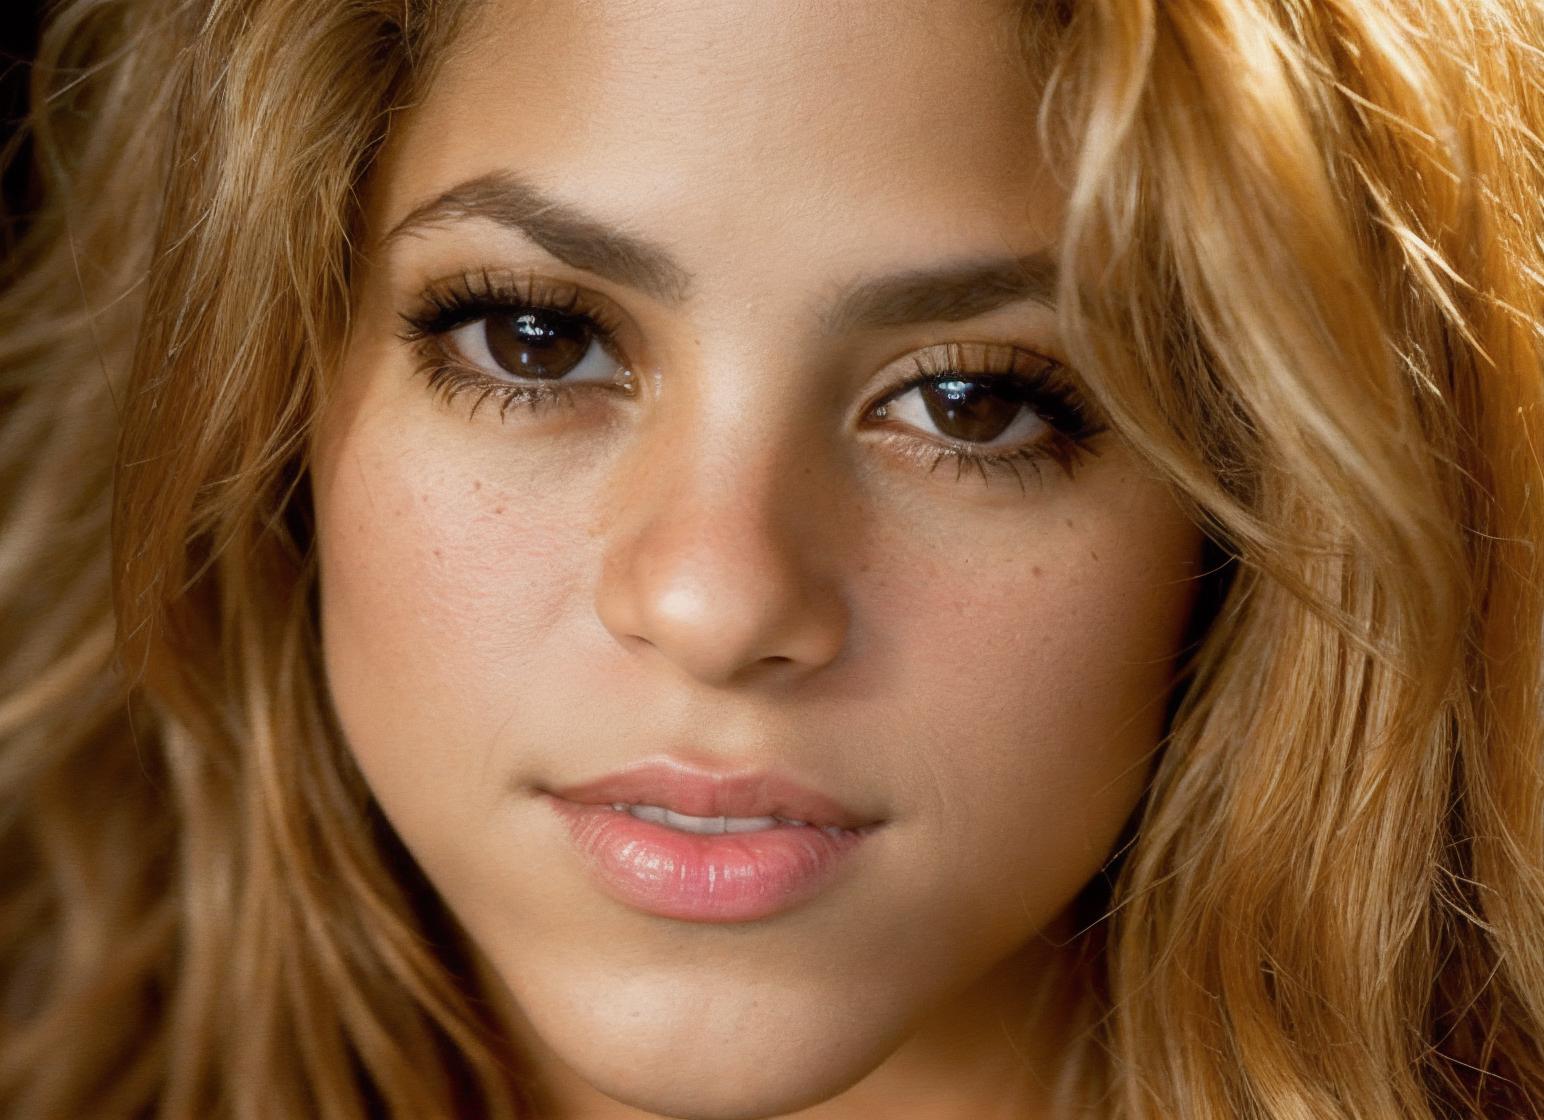 Shakira Mebarak image by astragartist